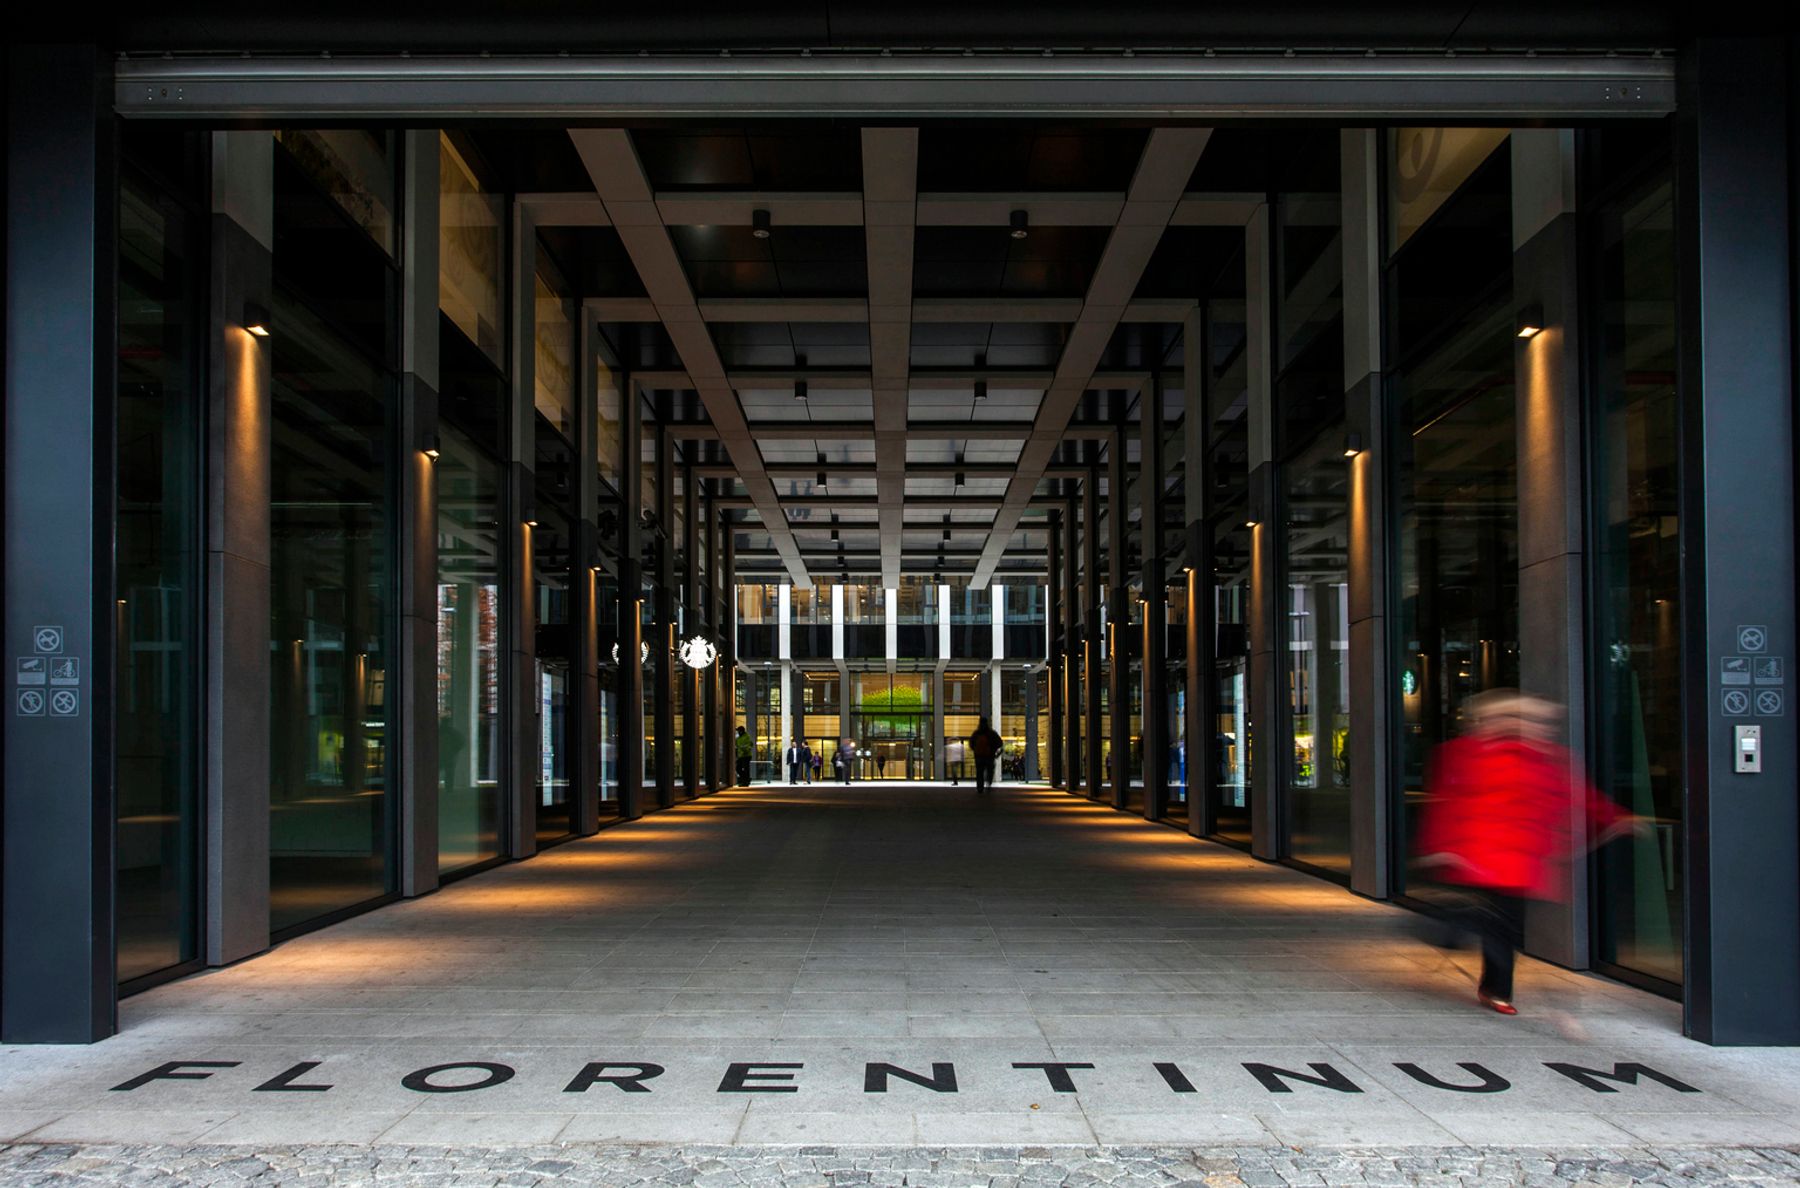 Business Center Florentinum, Praga. Architettura: Cigler Marani Architects, Praga. Fotografia: Dirk Vogel, Dortmund.